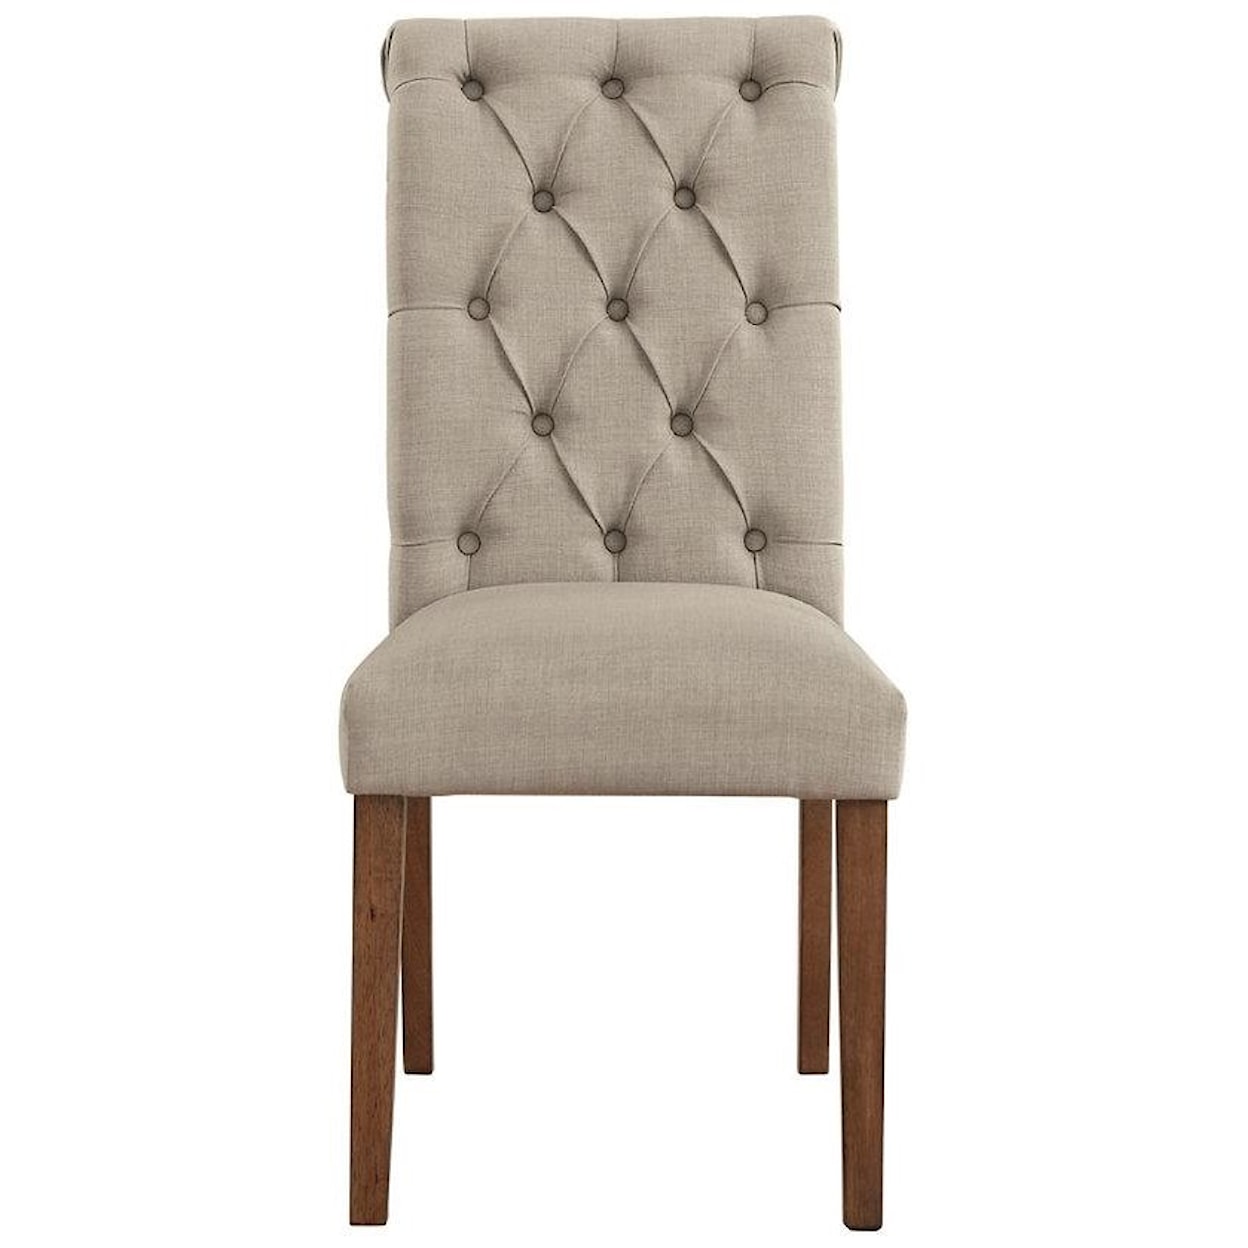 Ashley Furniture Harvina Harvina Upholstered Dining Chair- Beige